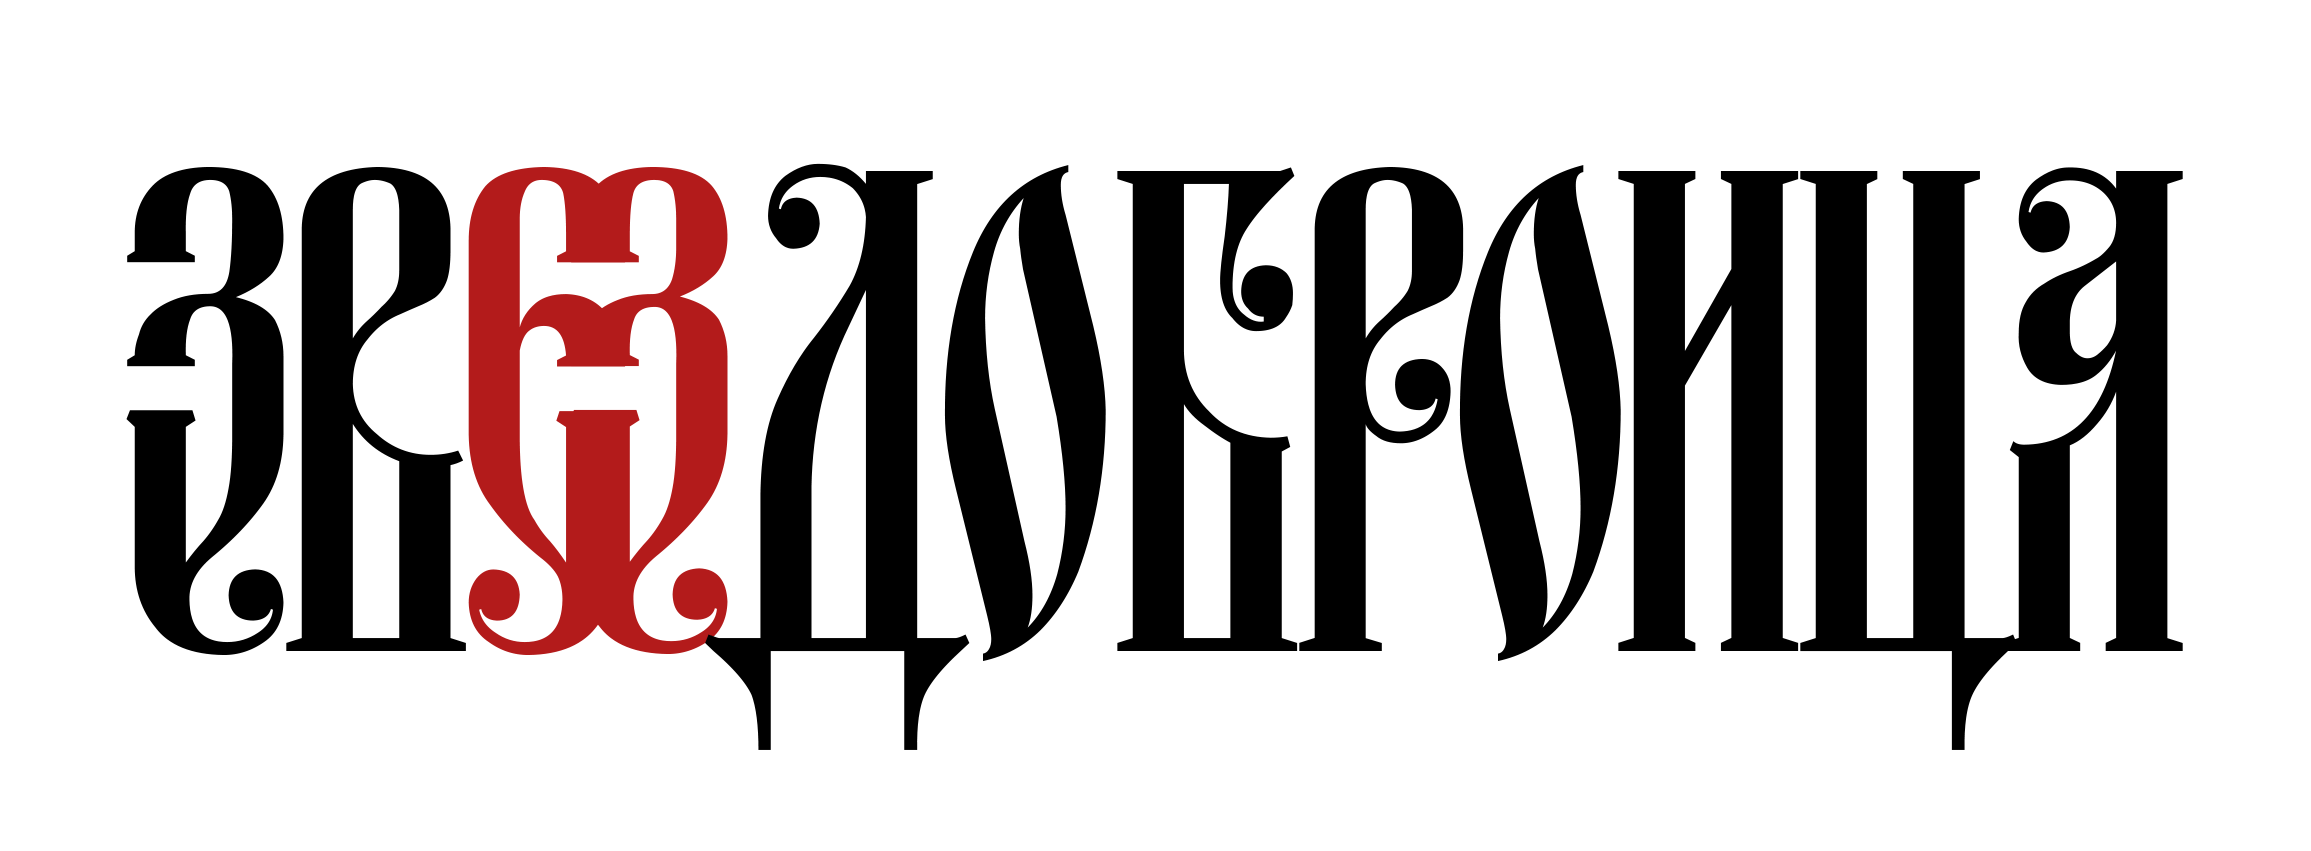 Svesdobroikata-logo